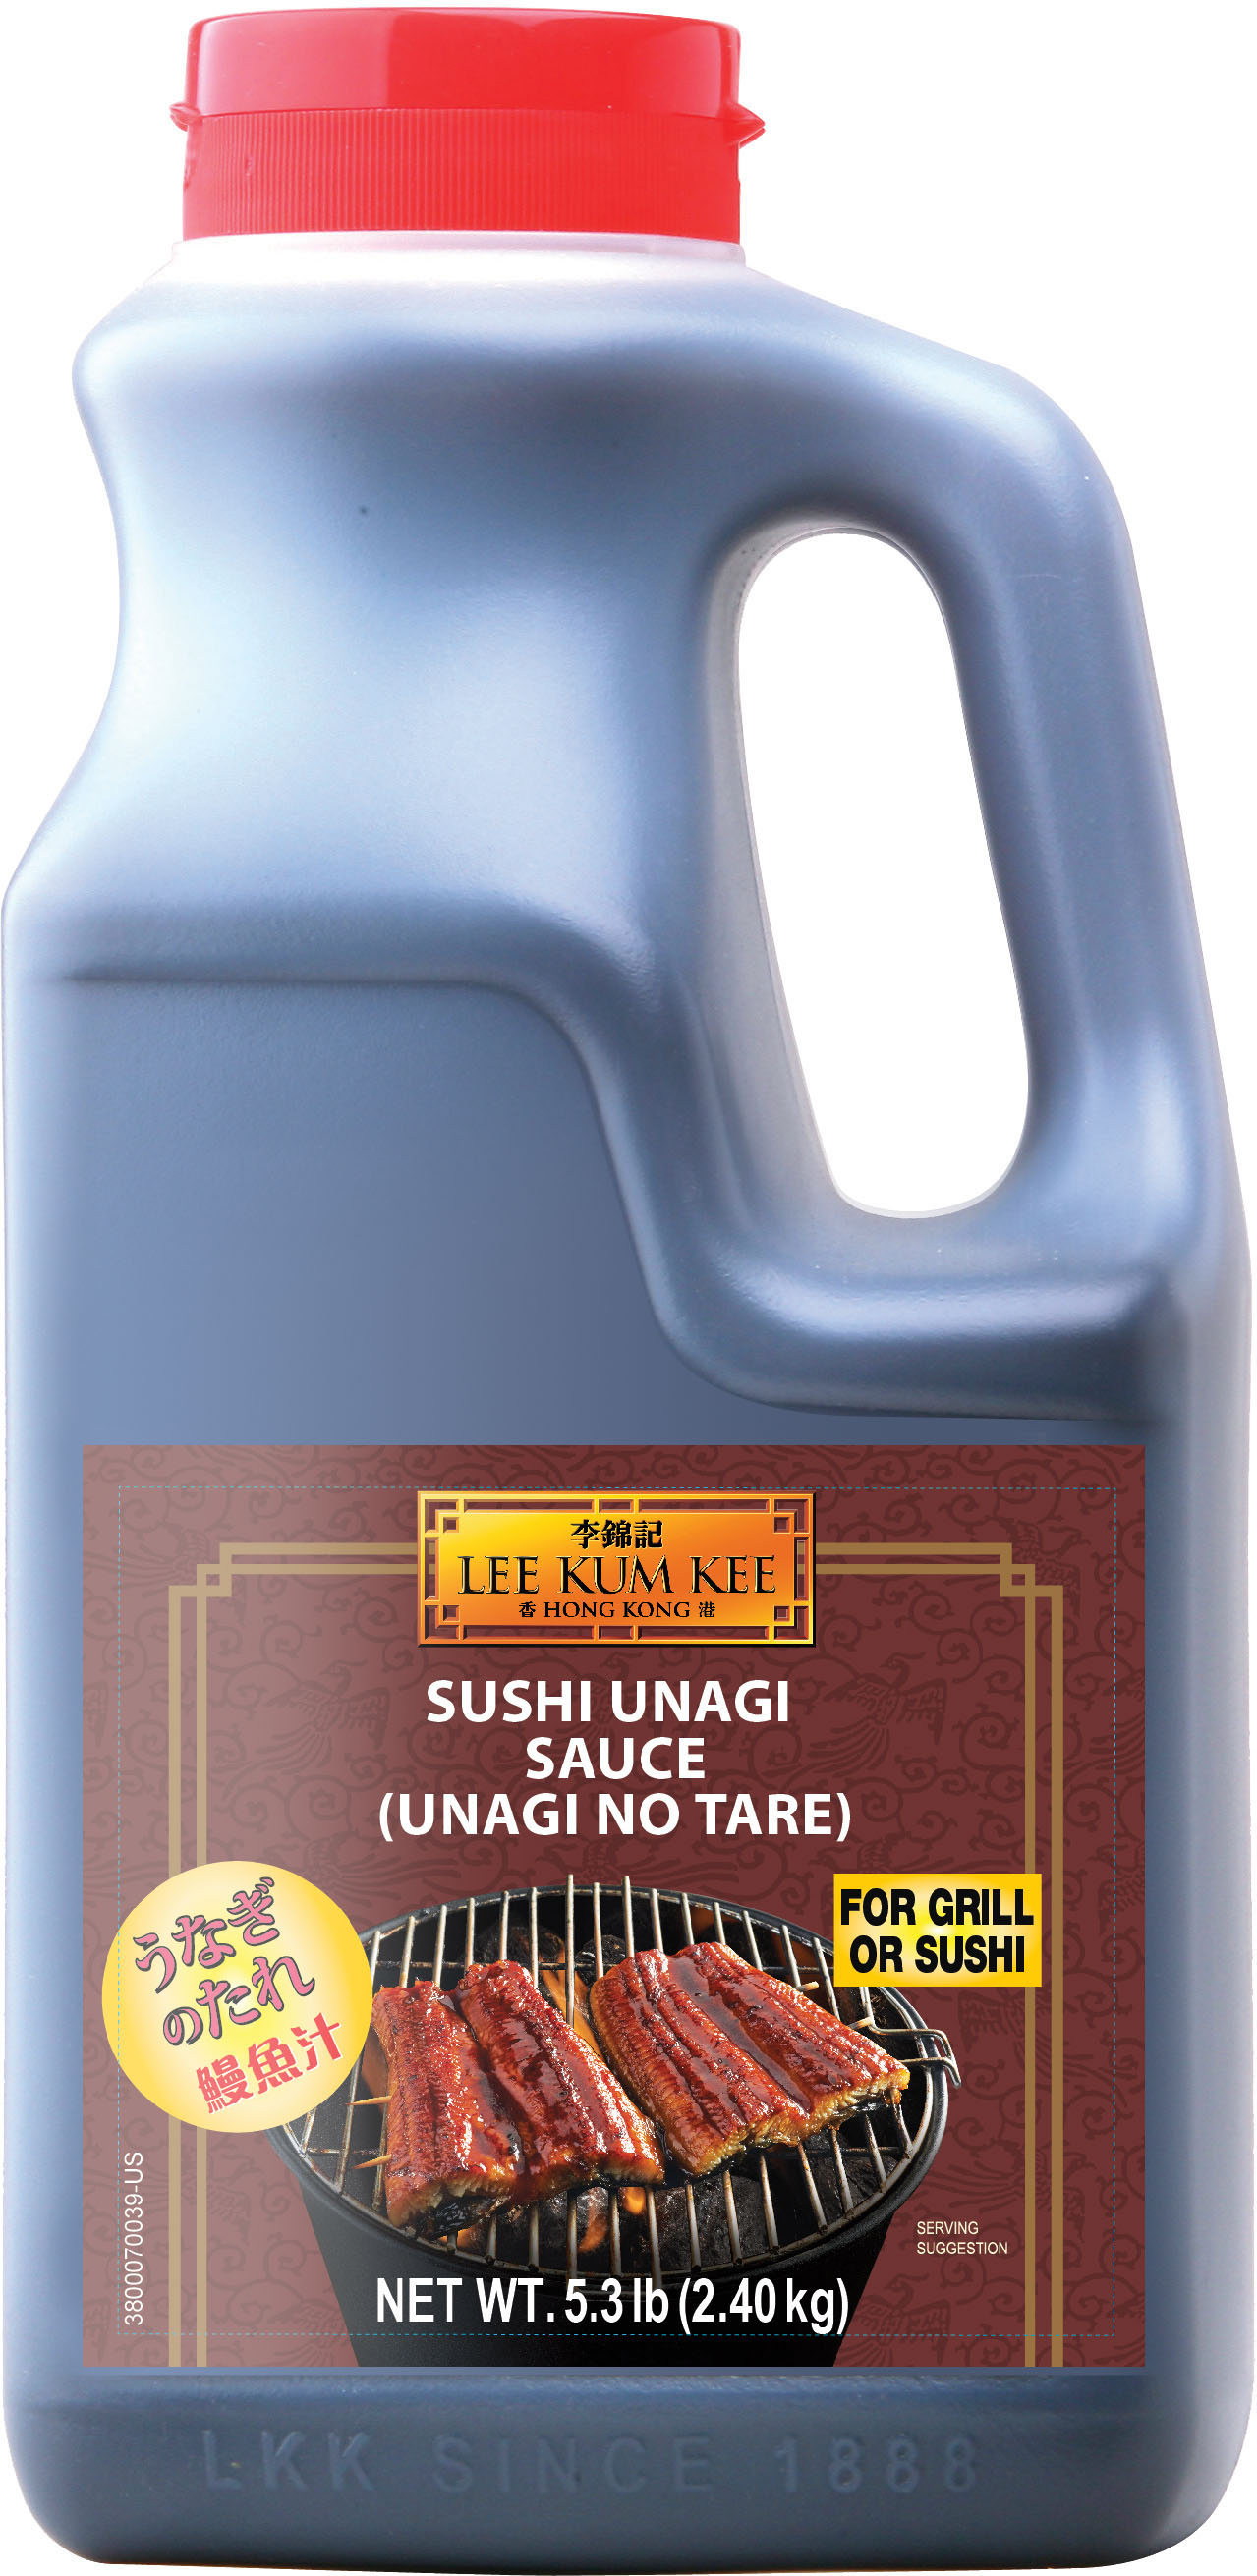 SUZUKATSU SUSHI UNAGI SAUCE, Asian Sauces & Oils